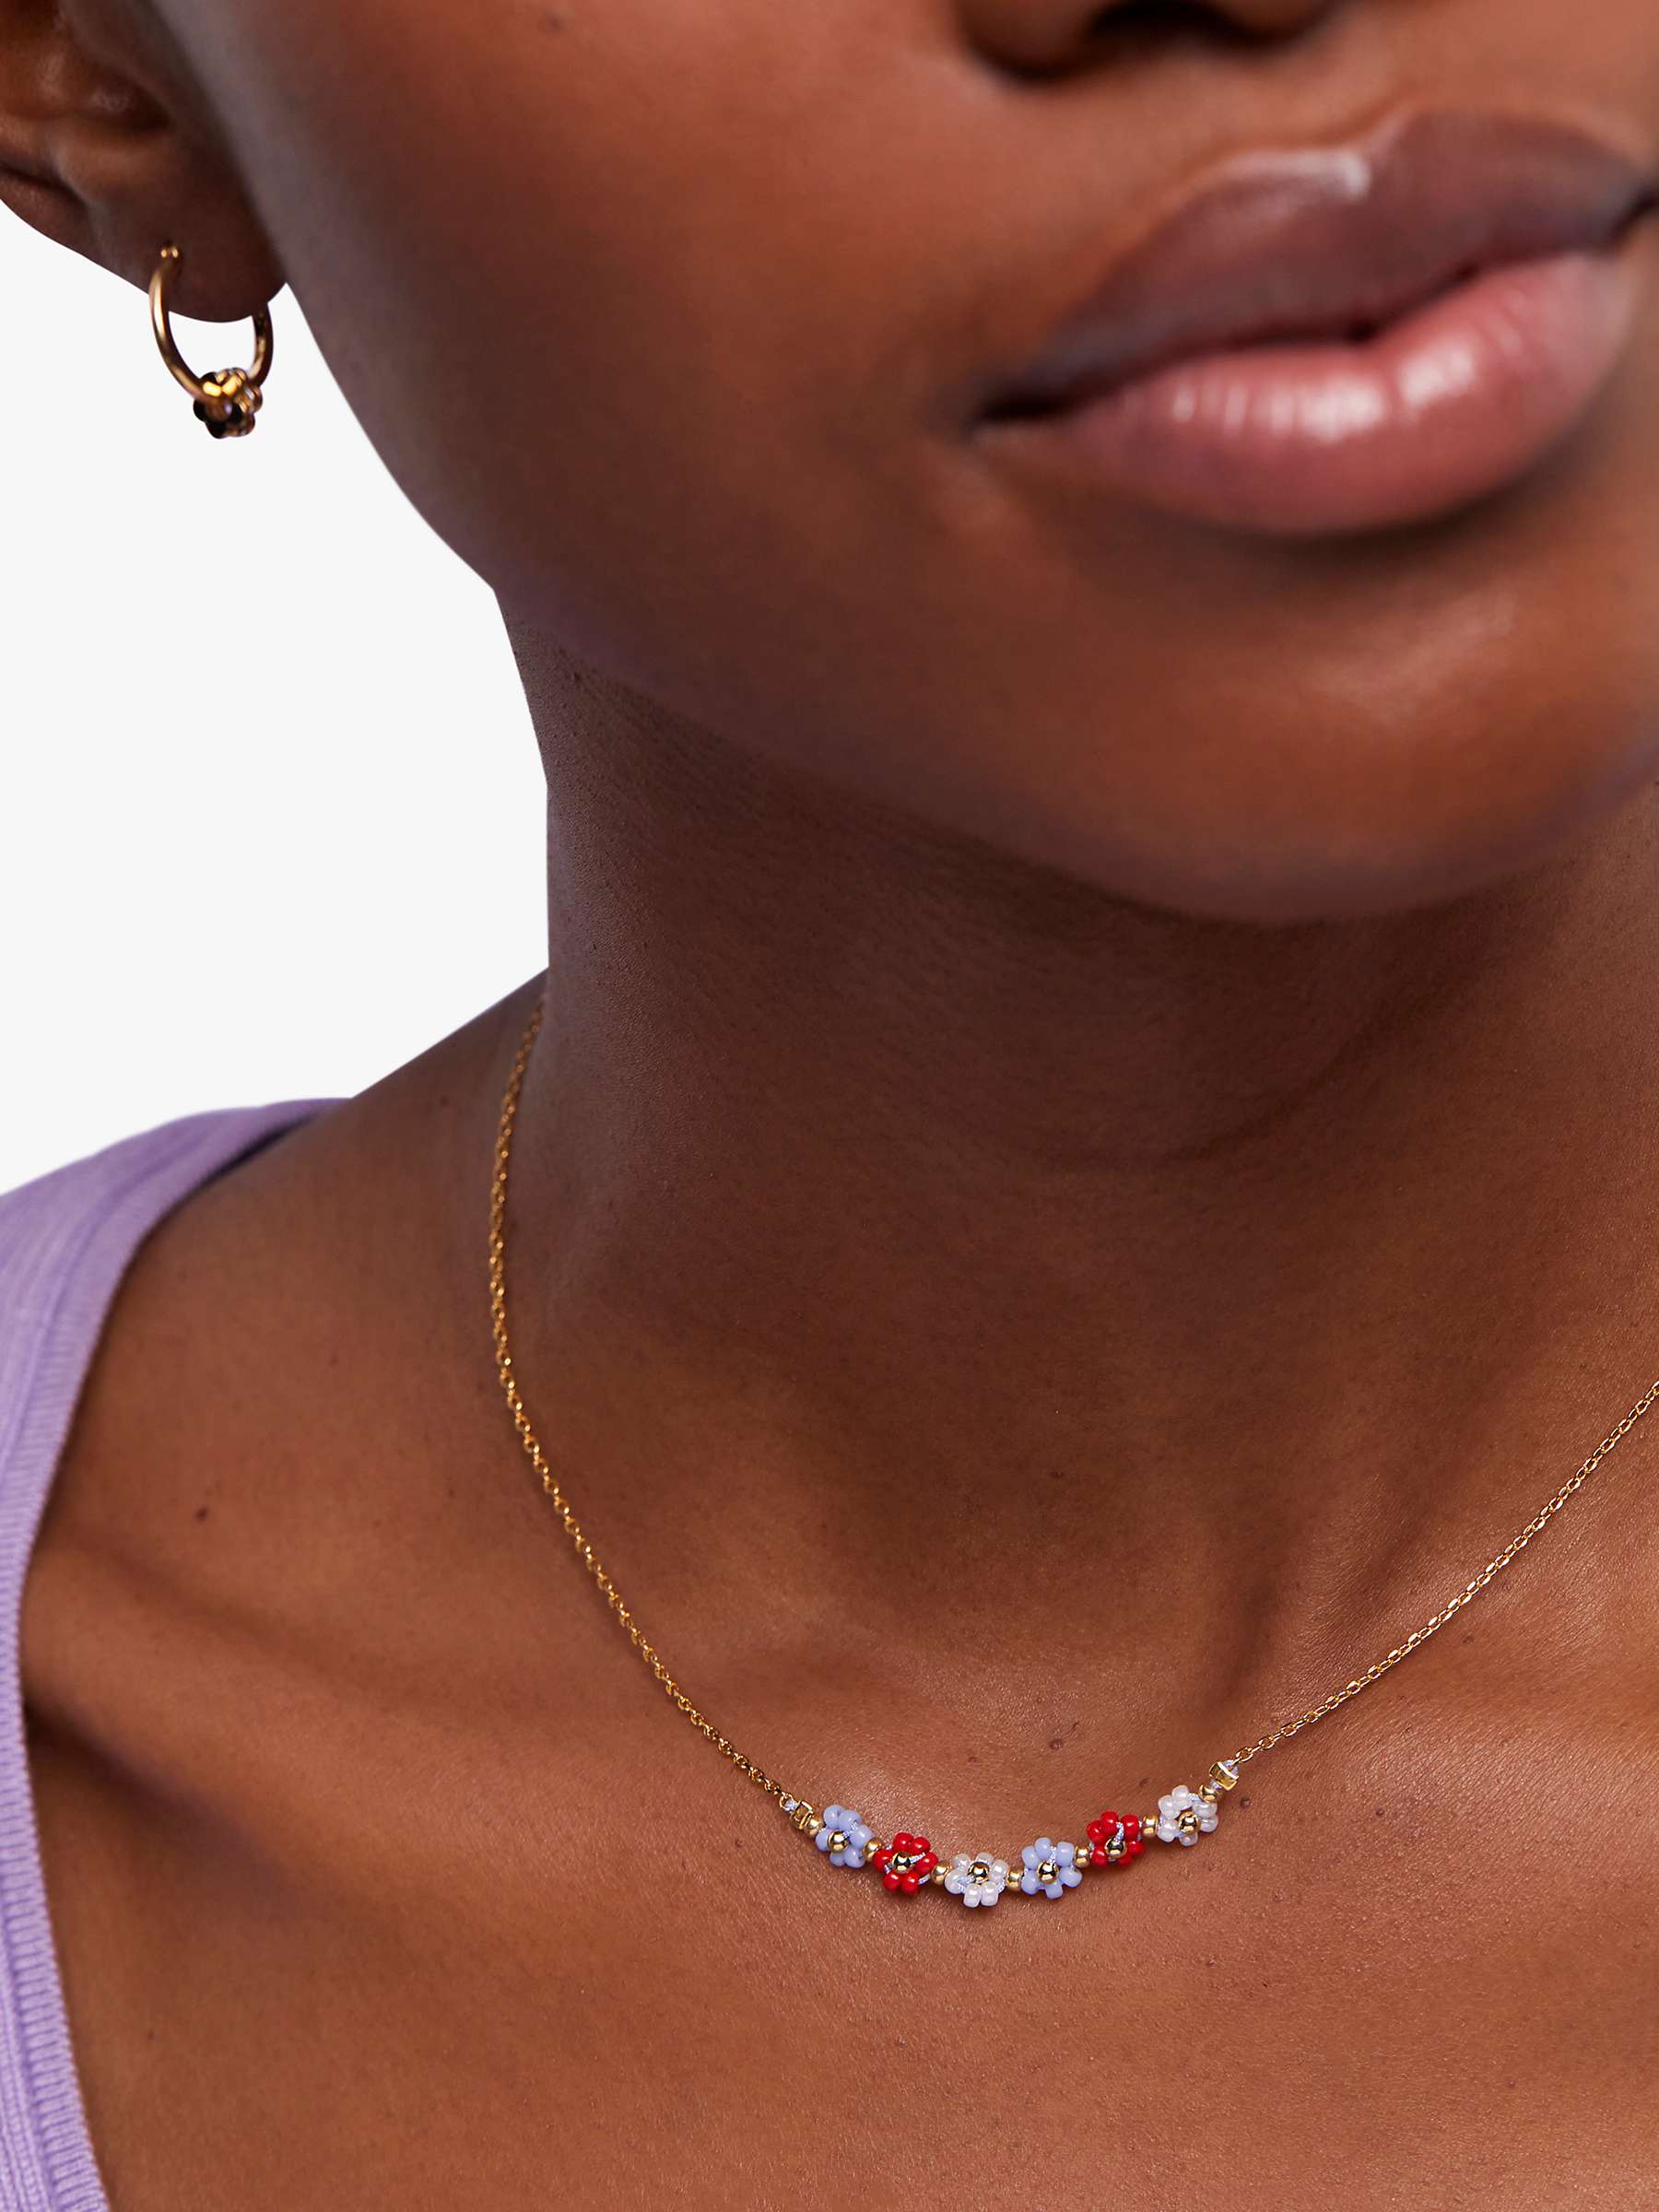 Buy Estella Bartlett Daisy Chain Necklace, Gold/Multi Online at johnlewis.com